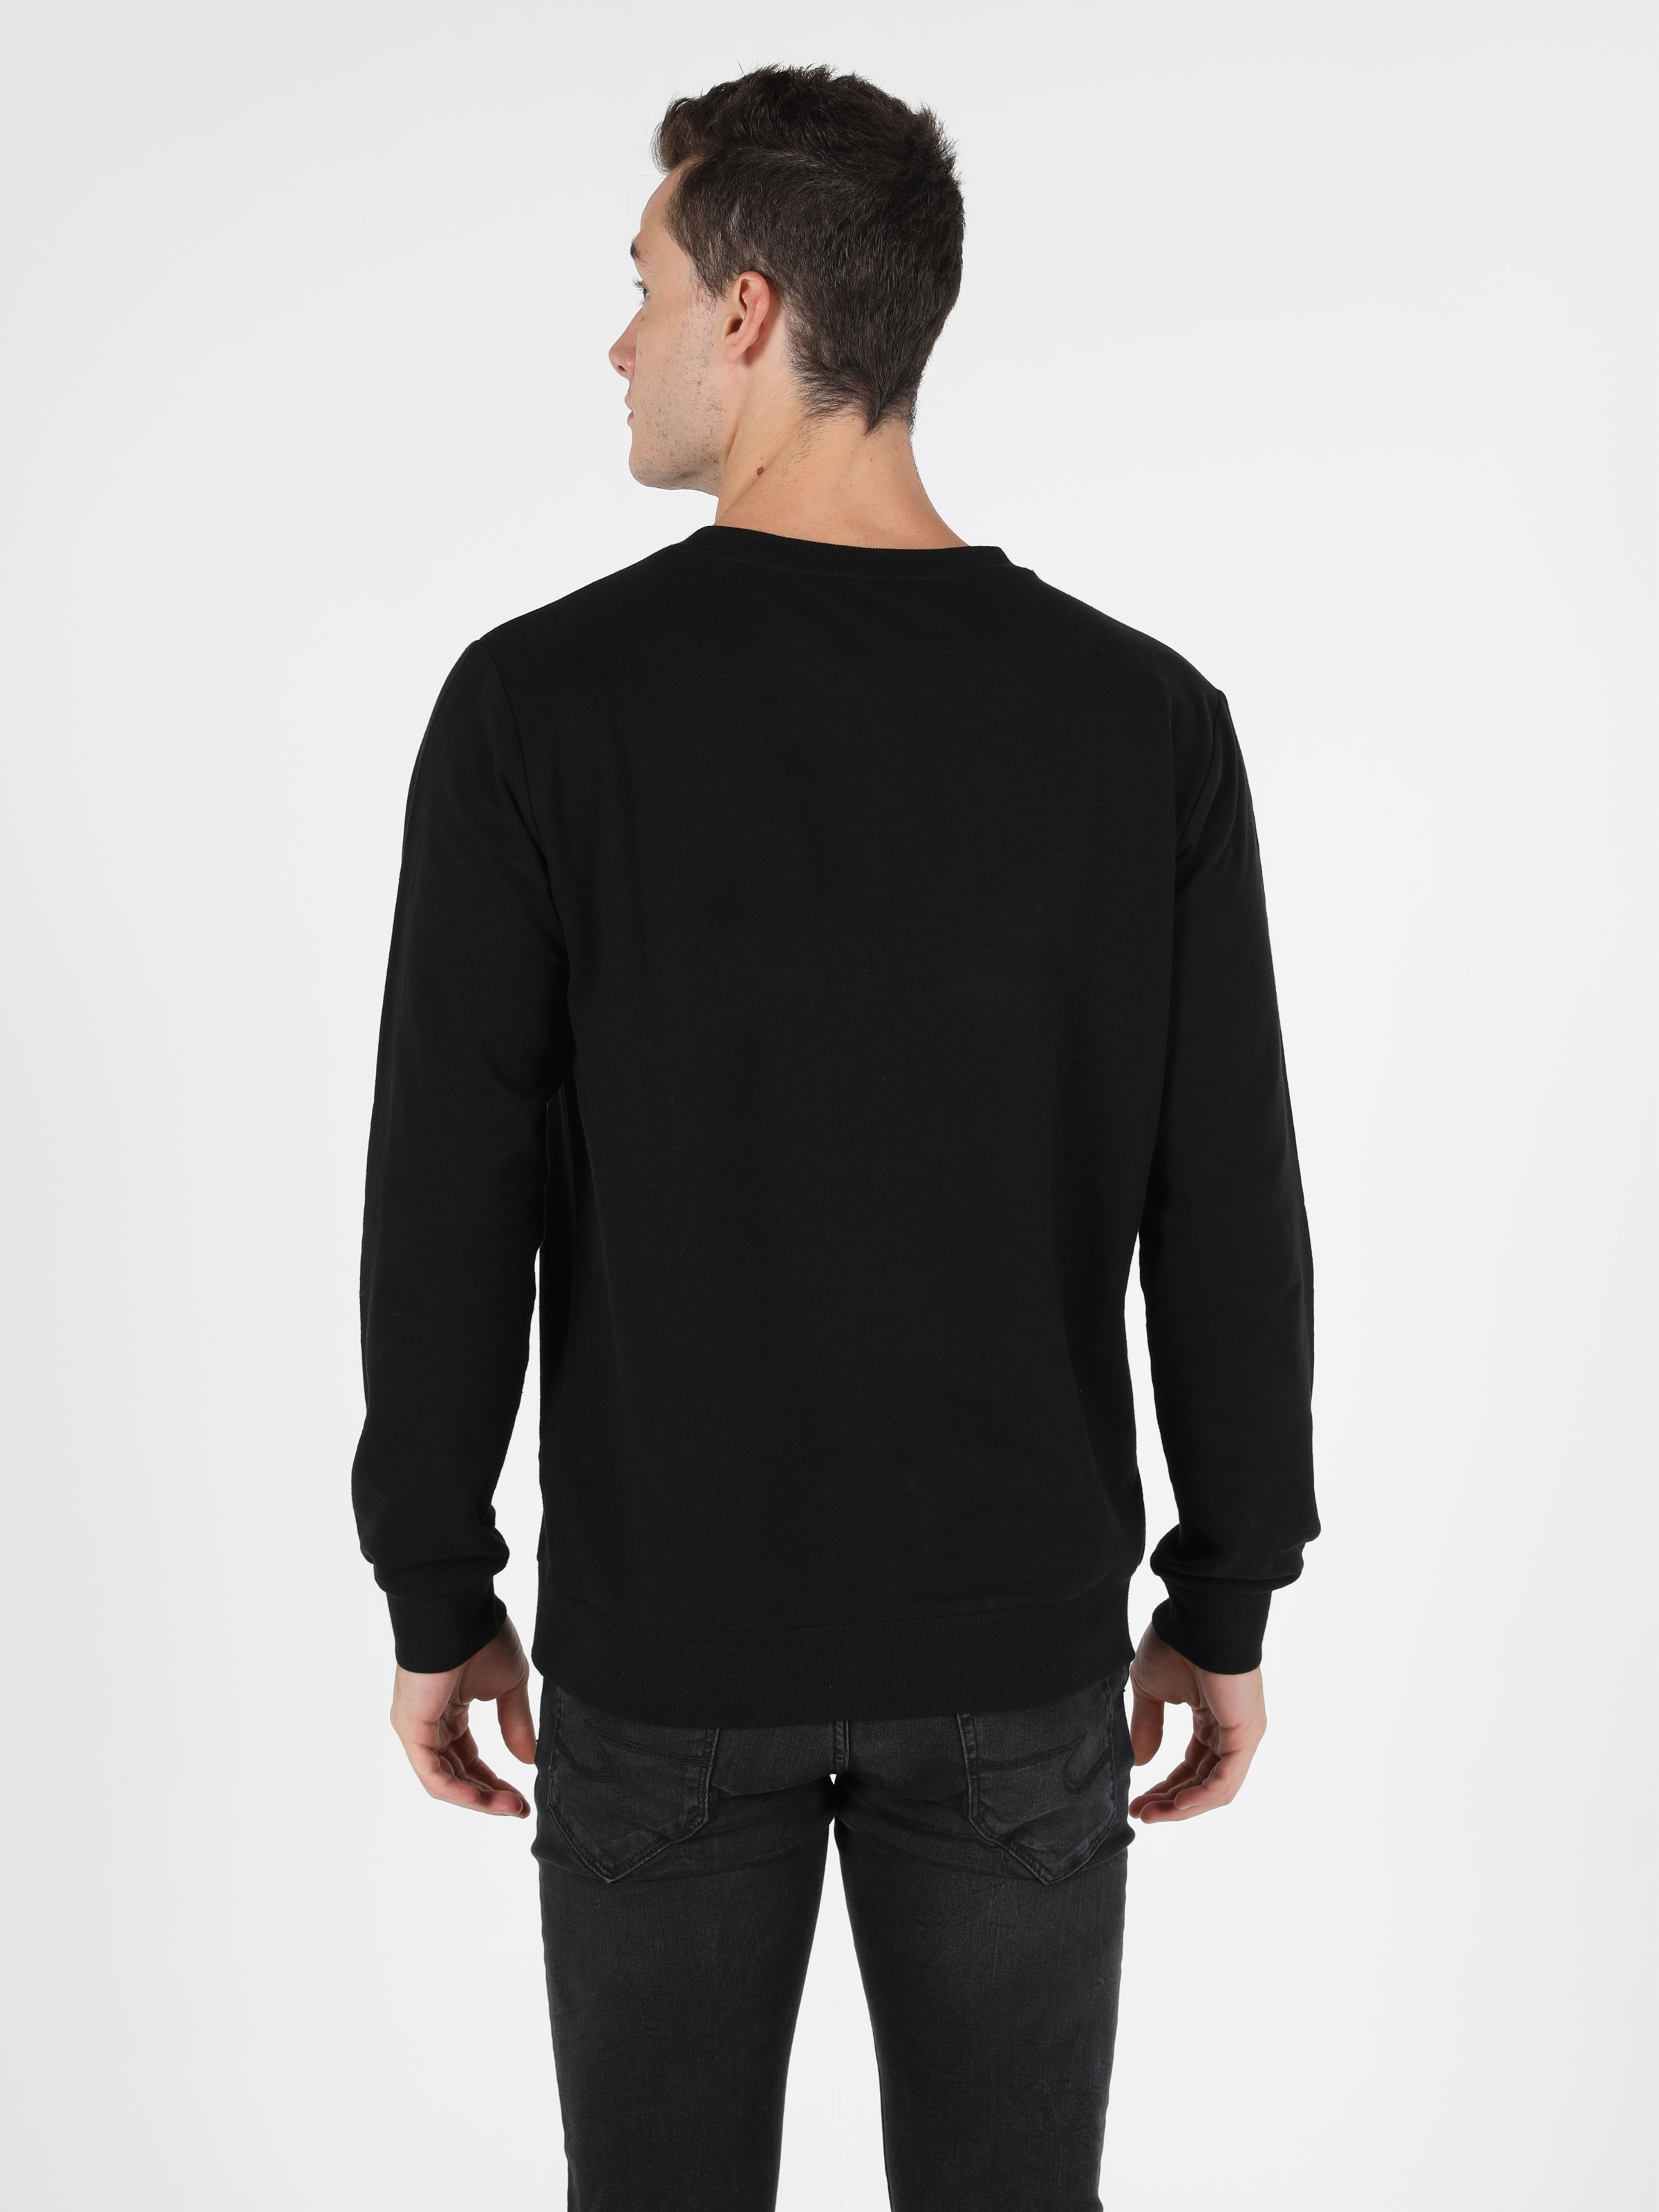 Colins Black Men Sweatshirt. 1